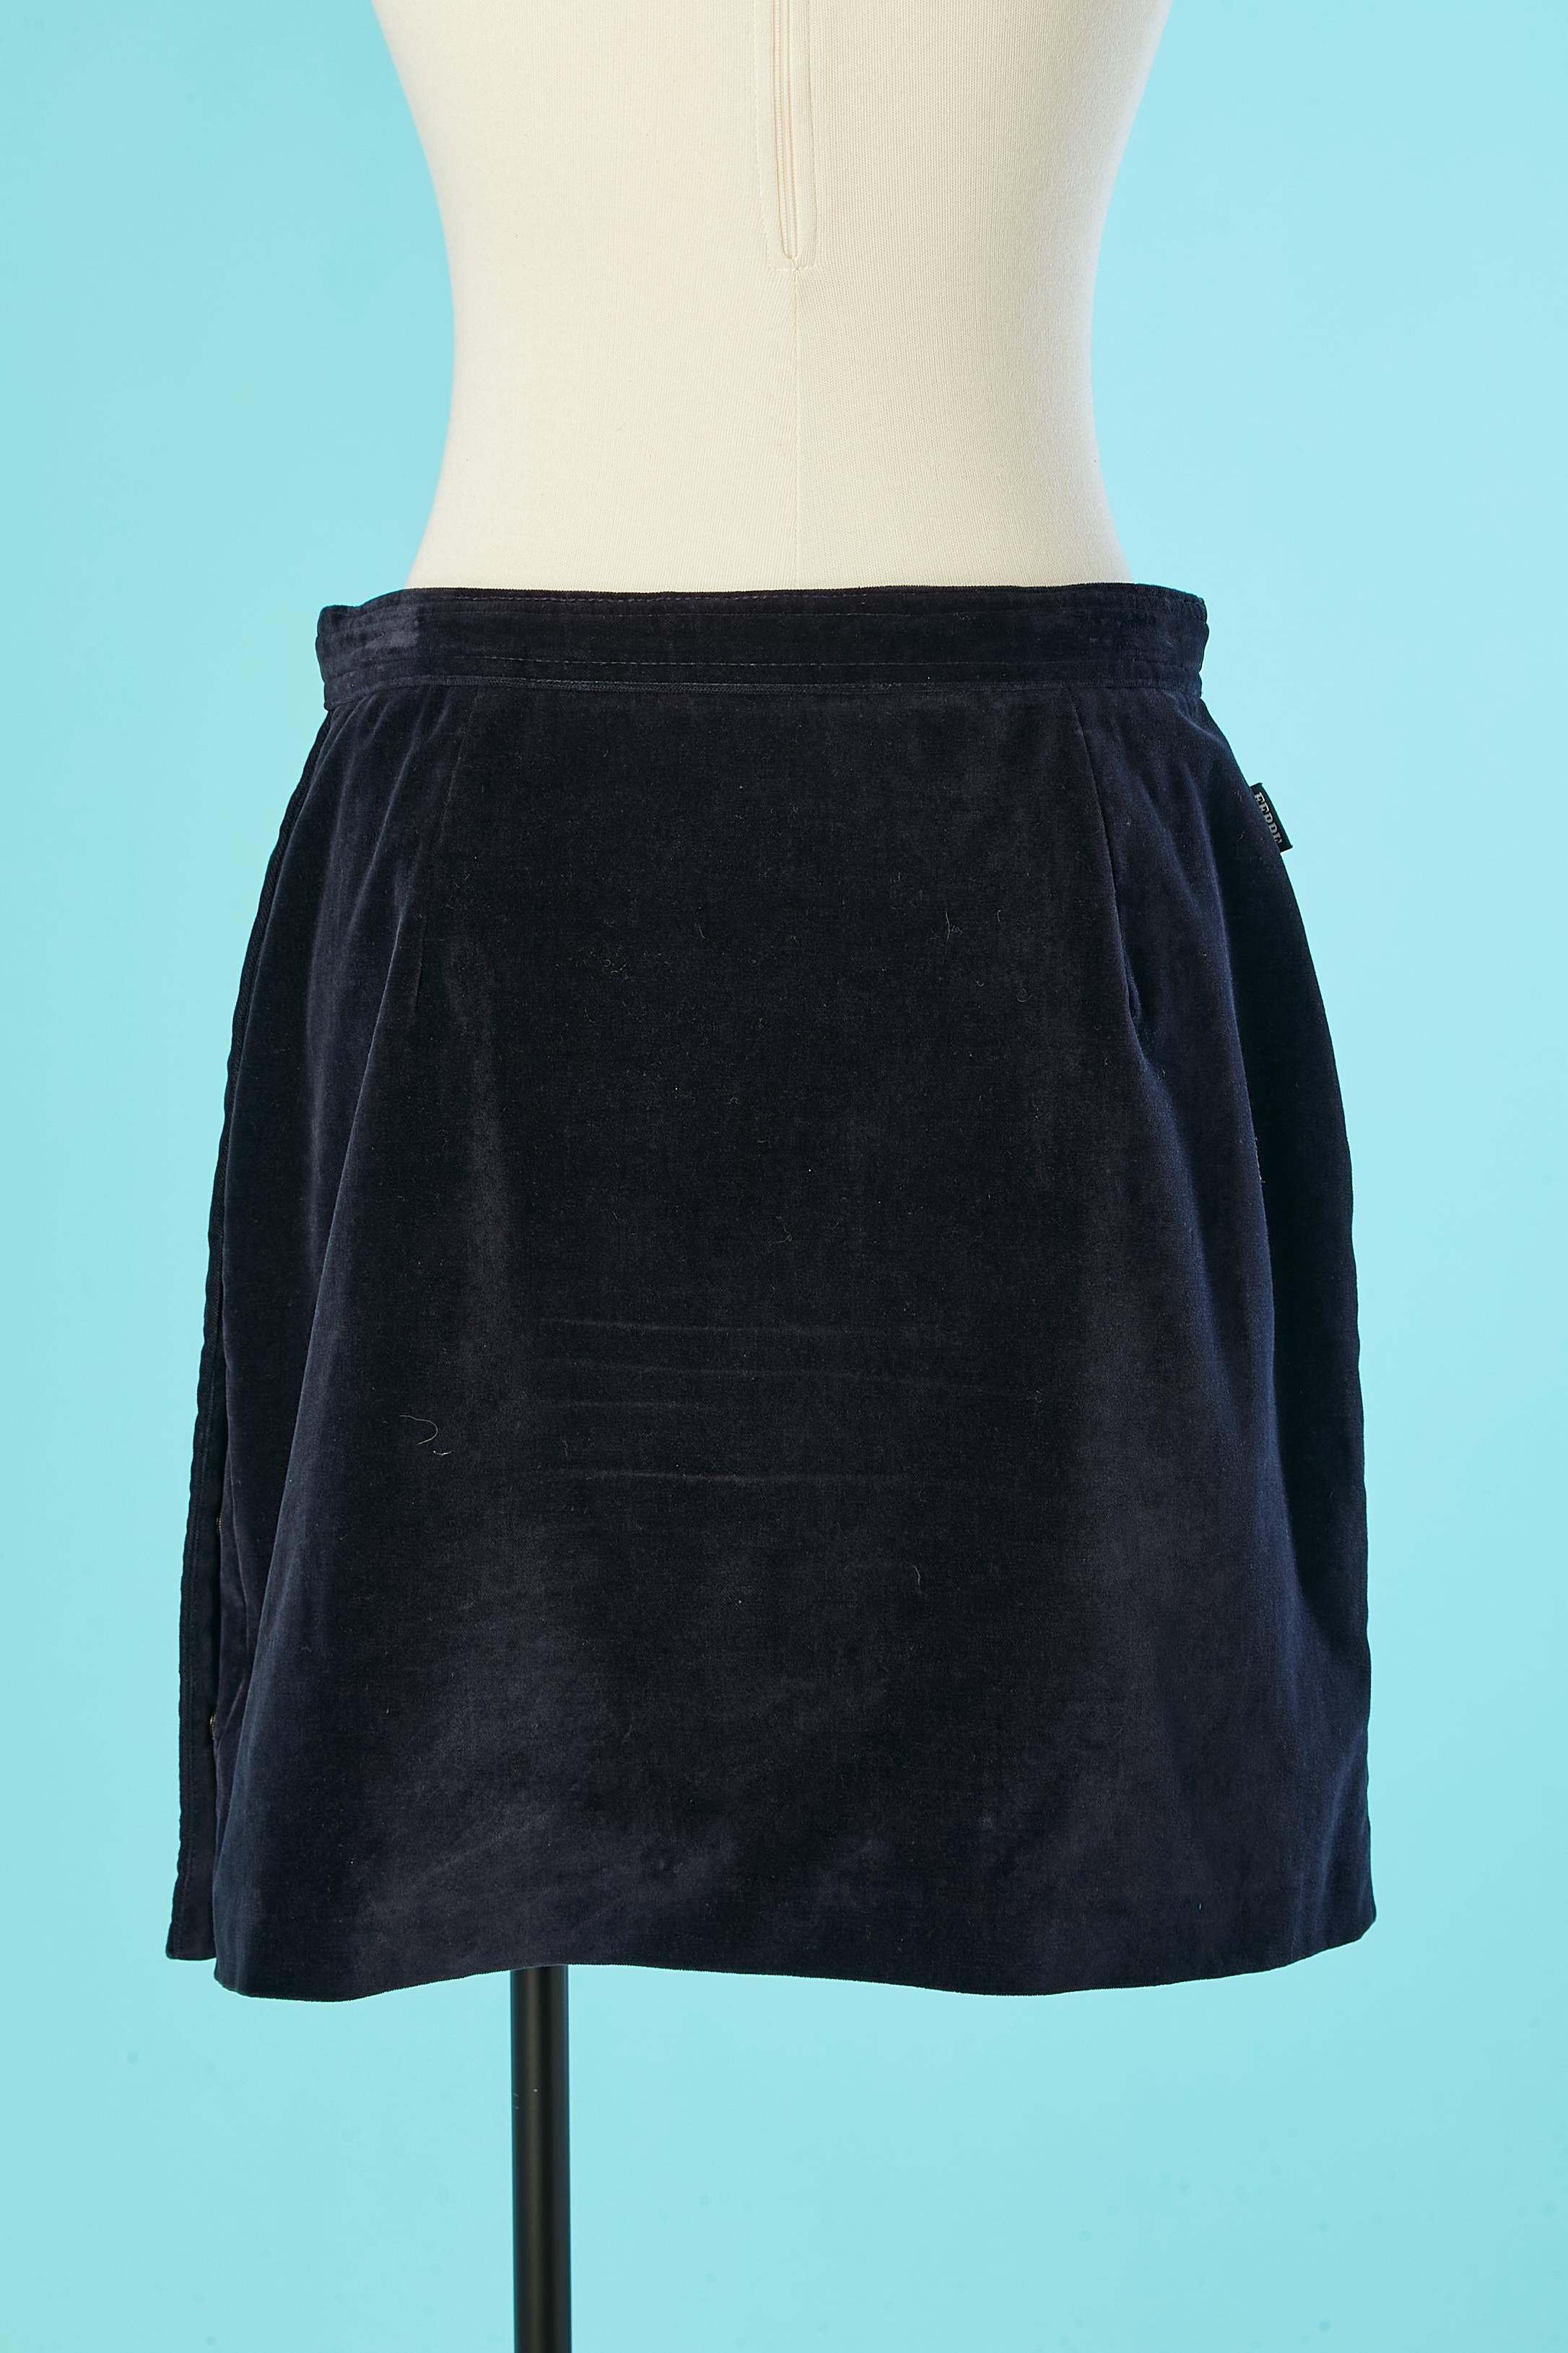 Velvet skirt with branded snap and branded belt buckle Gianfranco Ferré Jeans  For Sale 1